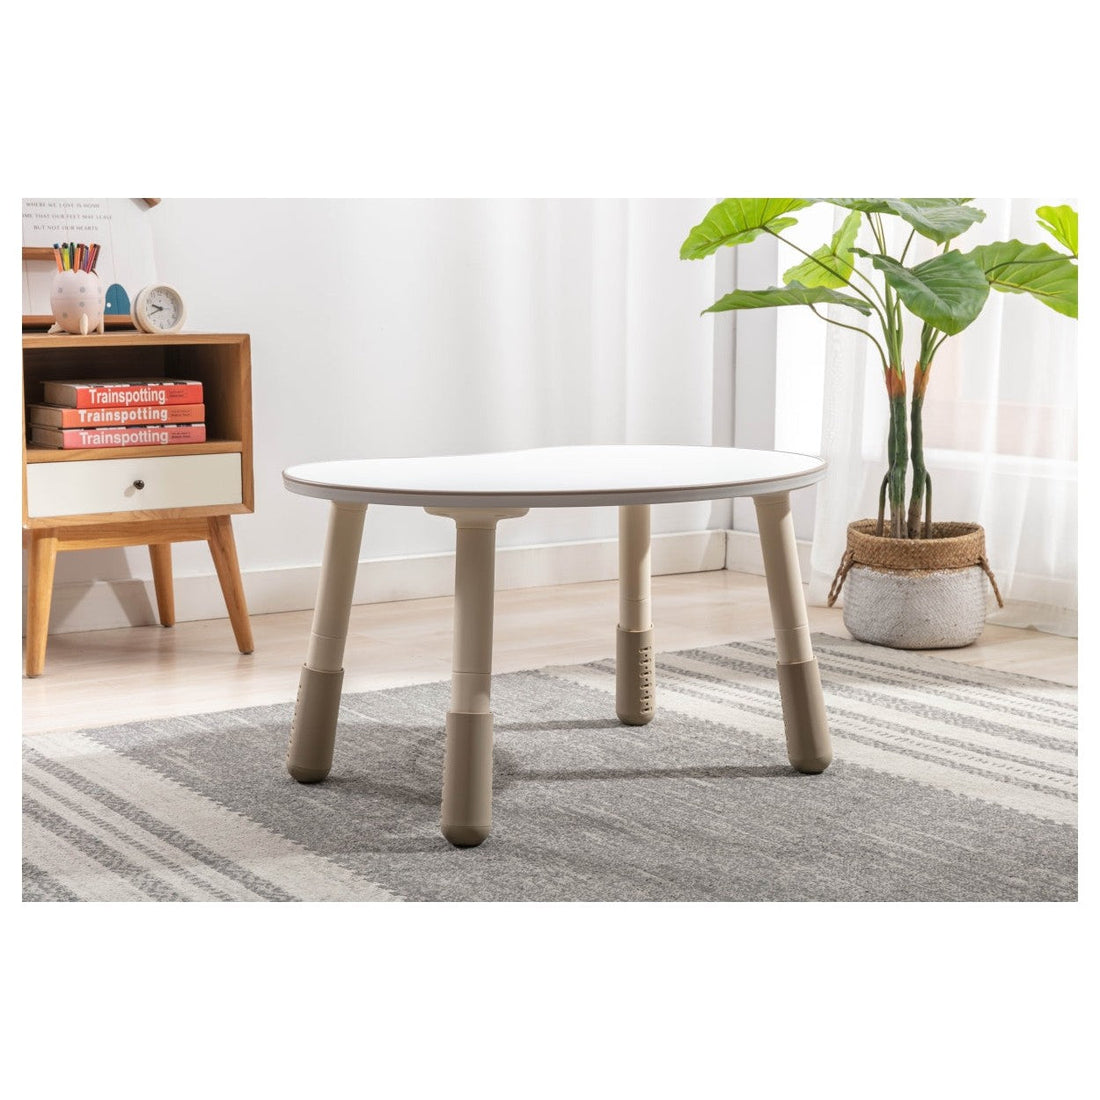 Kids Table, Adjustable Legs 11-21 Inches HMK625-31